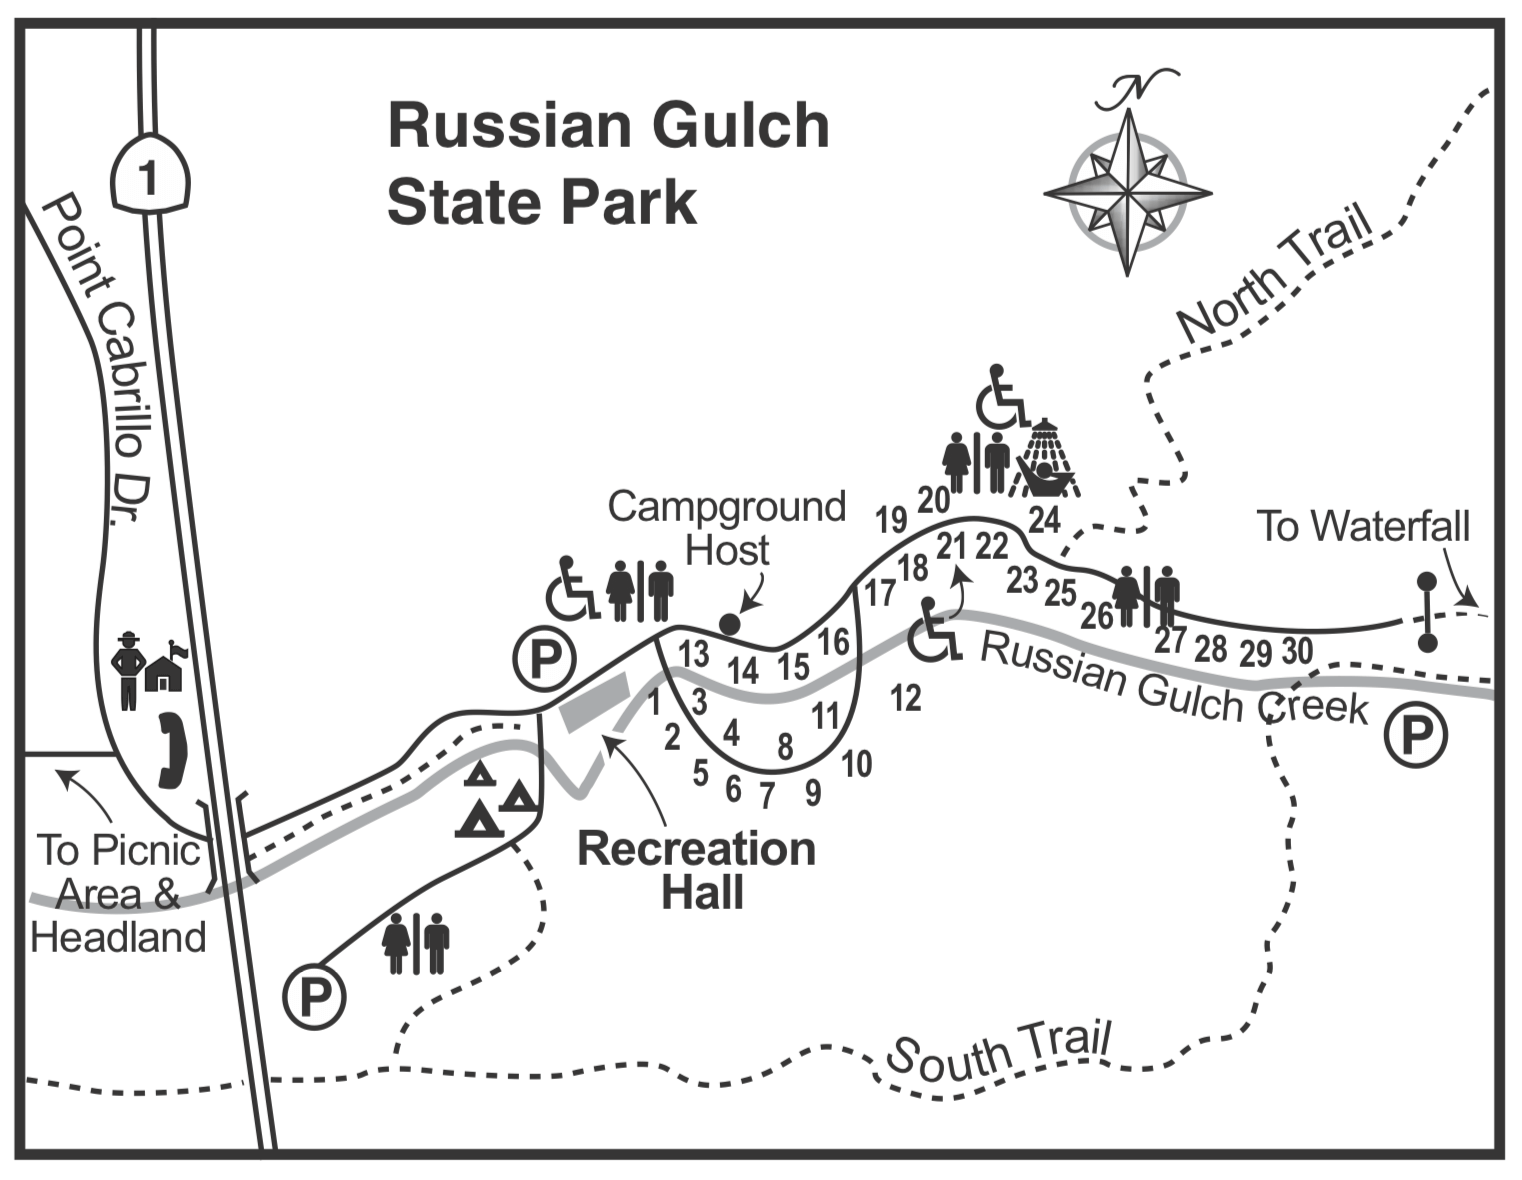 Russian Gulch State Park. 